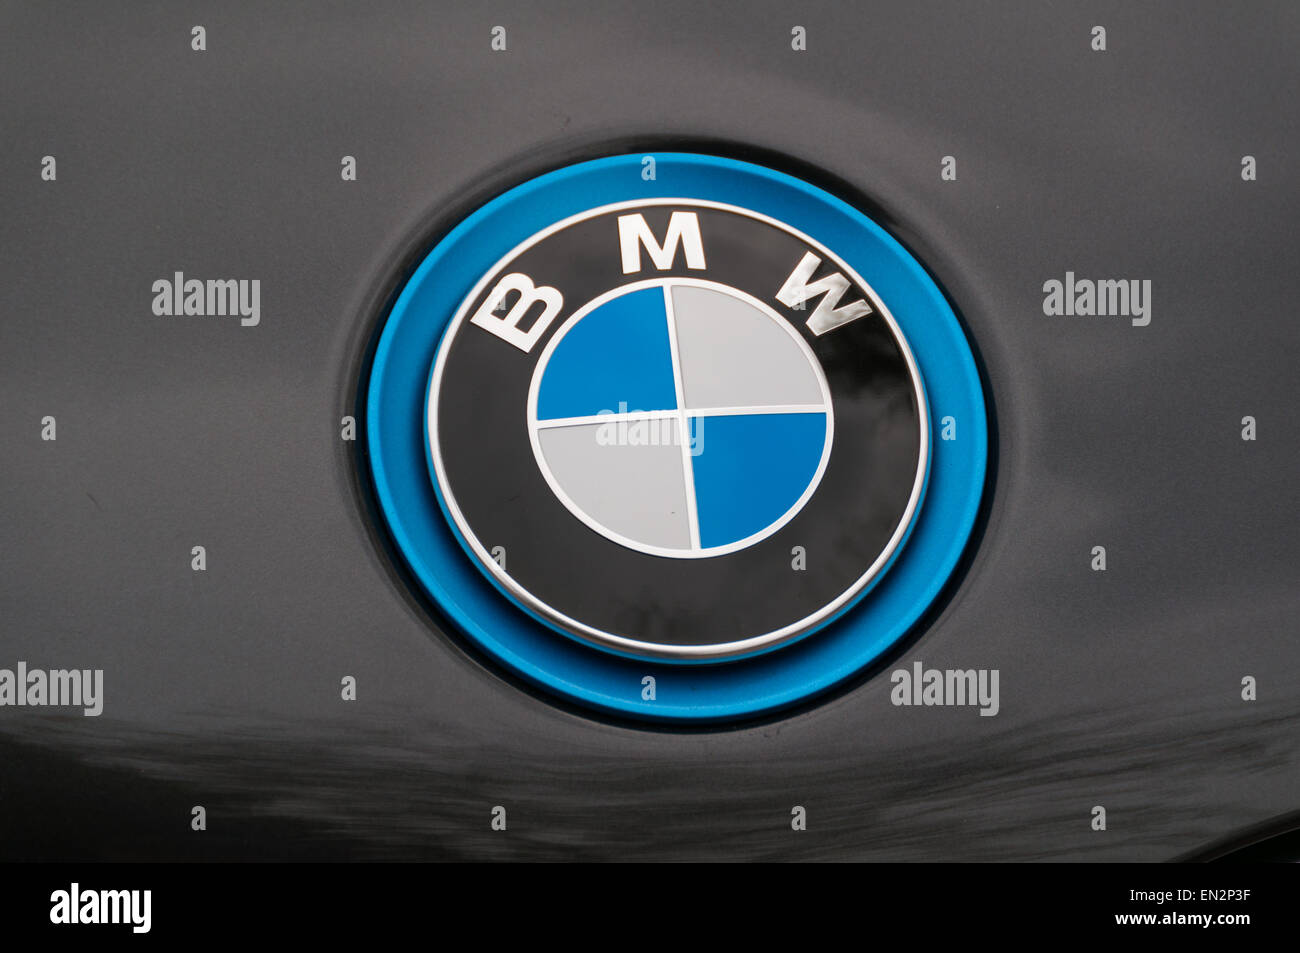 Blue BMW emblem on black background Stock Photo - Alamy